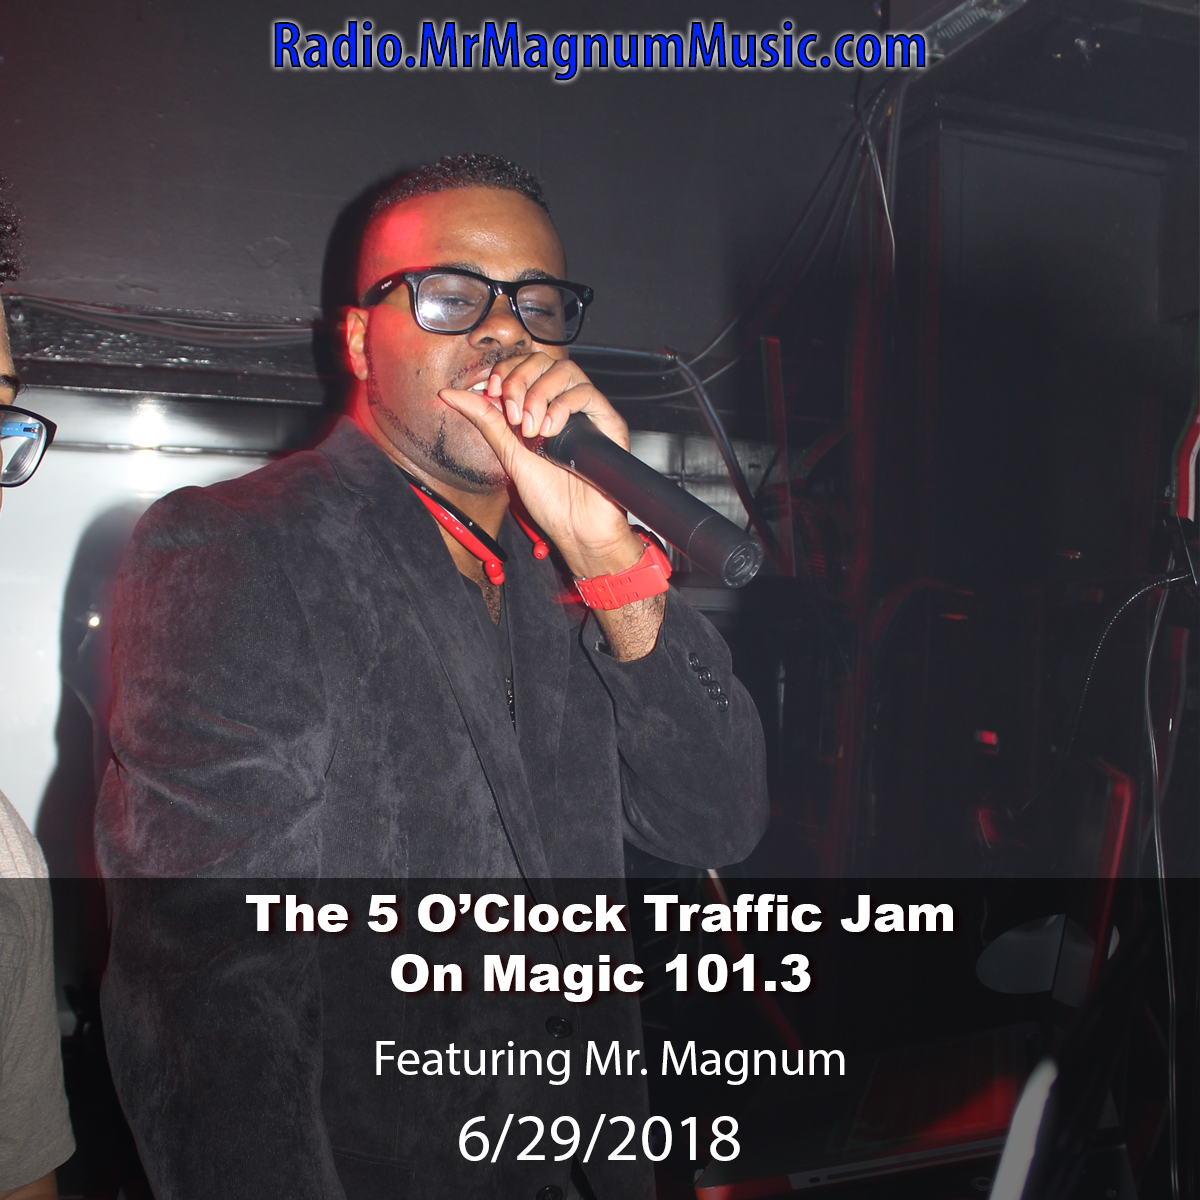 The 5 O'Clock Traffic Jam 20180629 featuring Gainesville's #1 DJ, Mr. Magnum on Magic 101.3